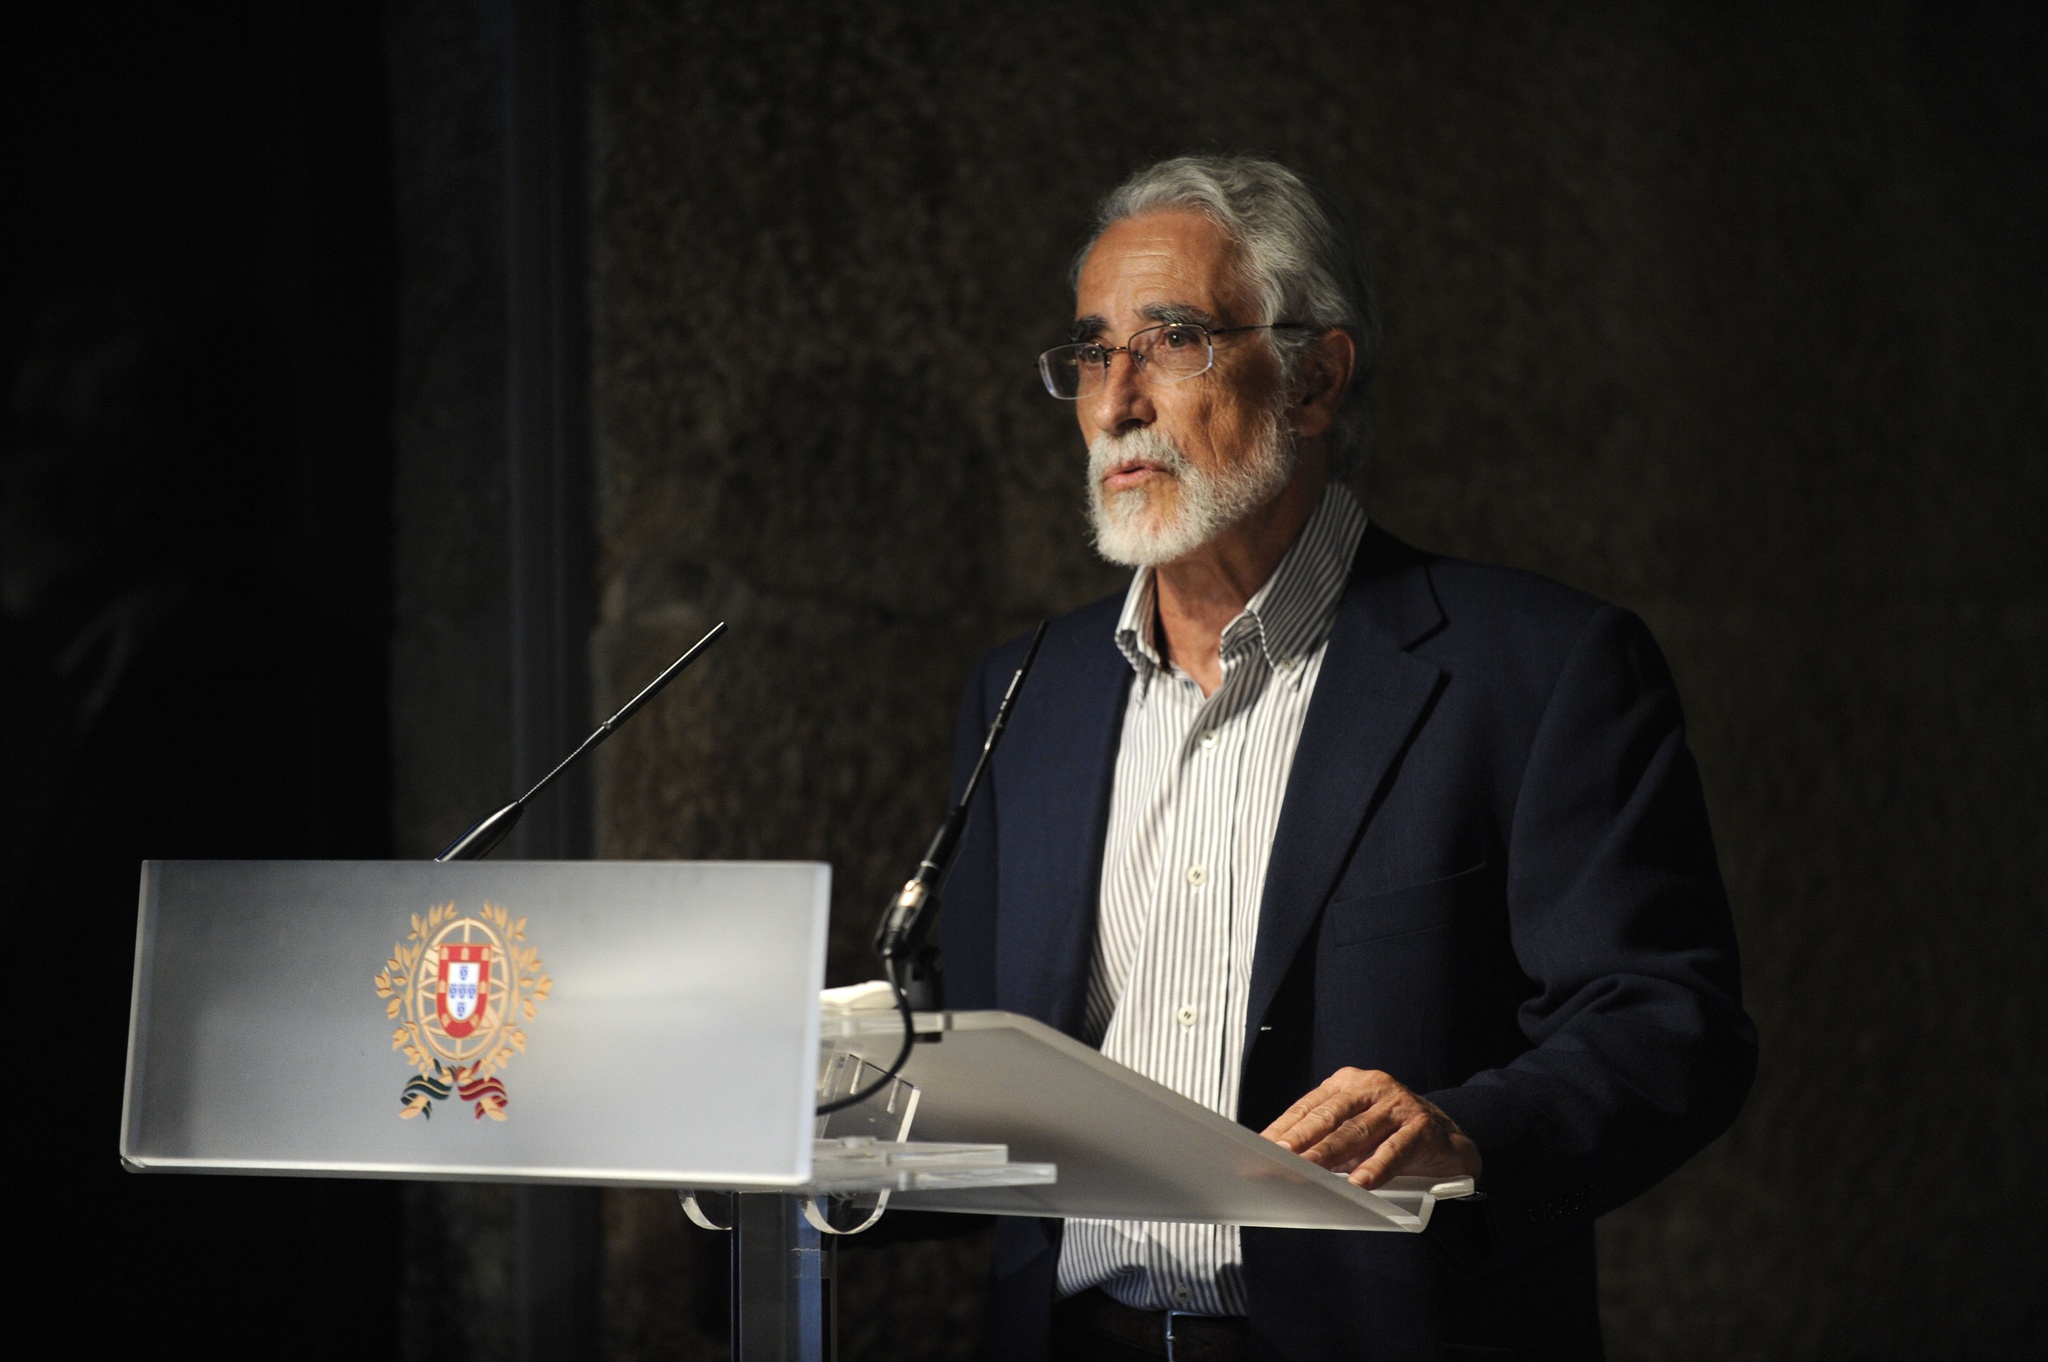 Vítor Aguiar e Silva Literary Life Award für den Essayisten João Barrento |  Vergeben